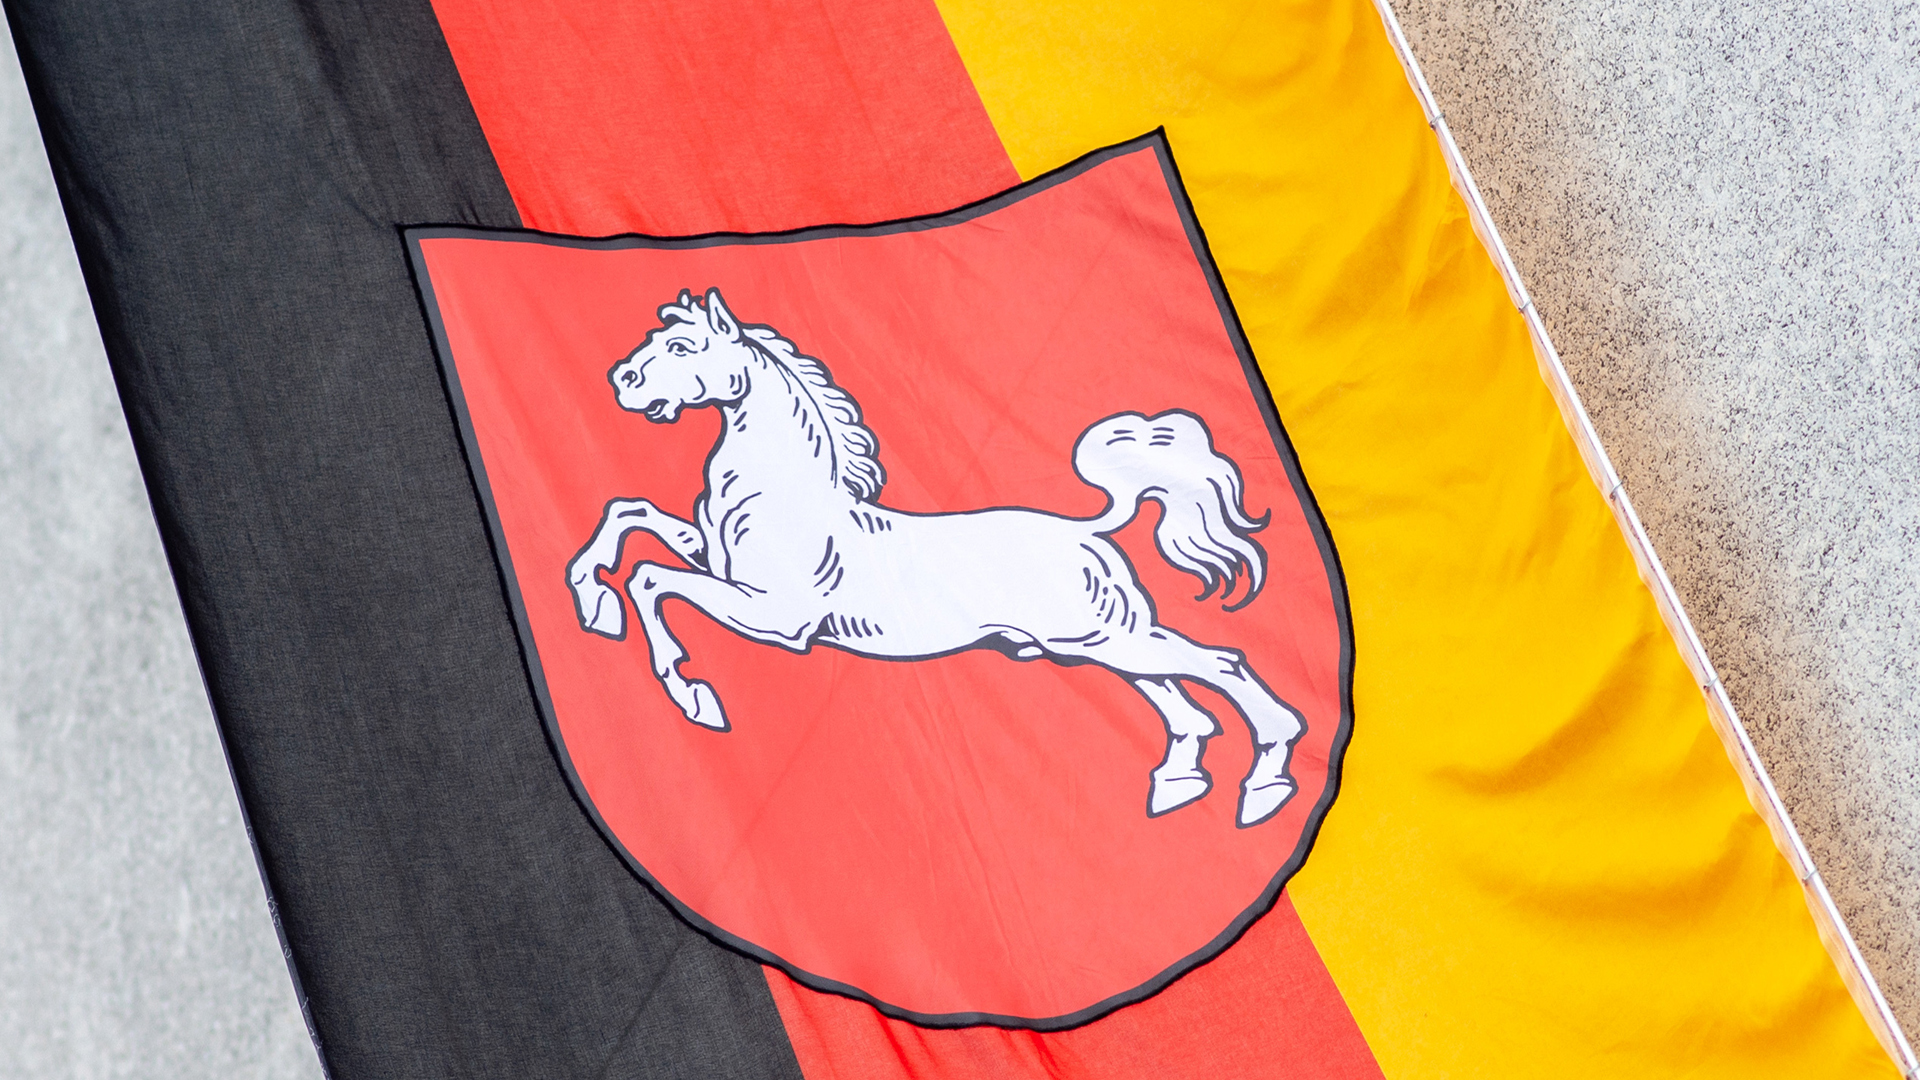 Fahne des Bundeslands Niedersachsen | picture alliance/dpa